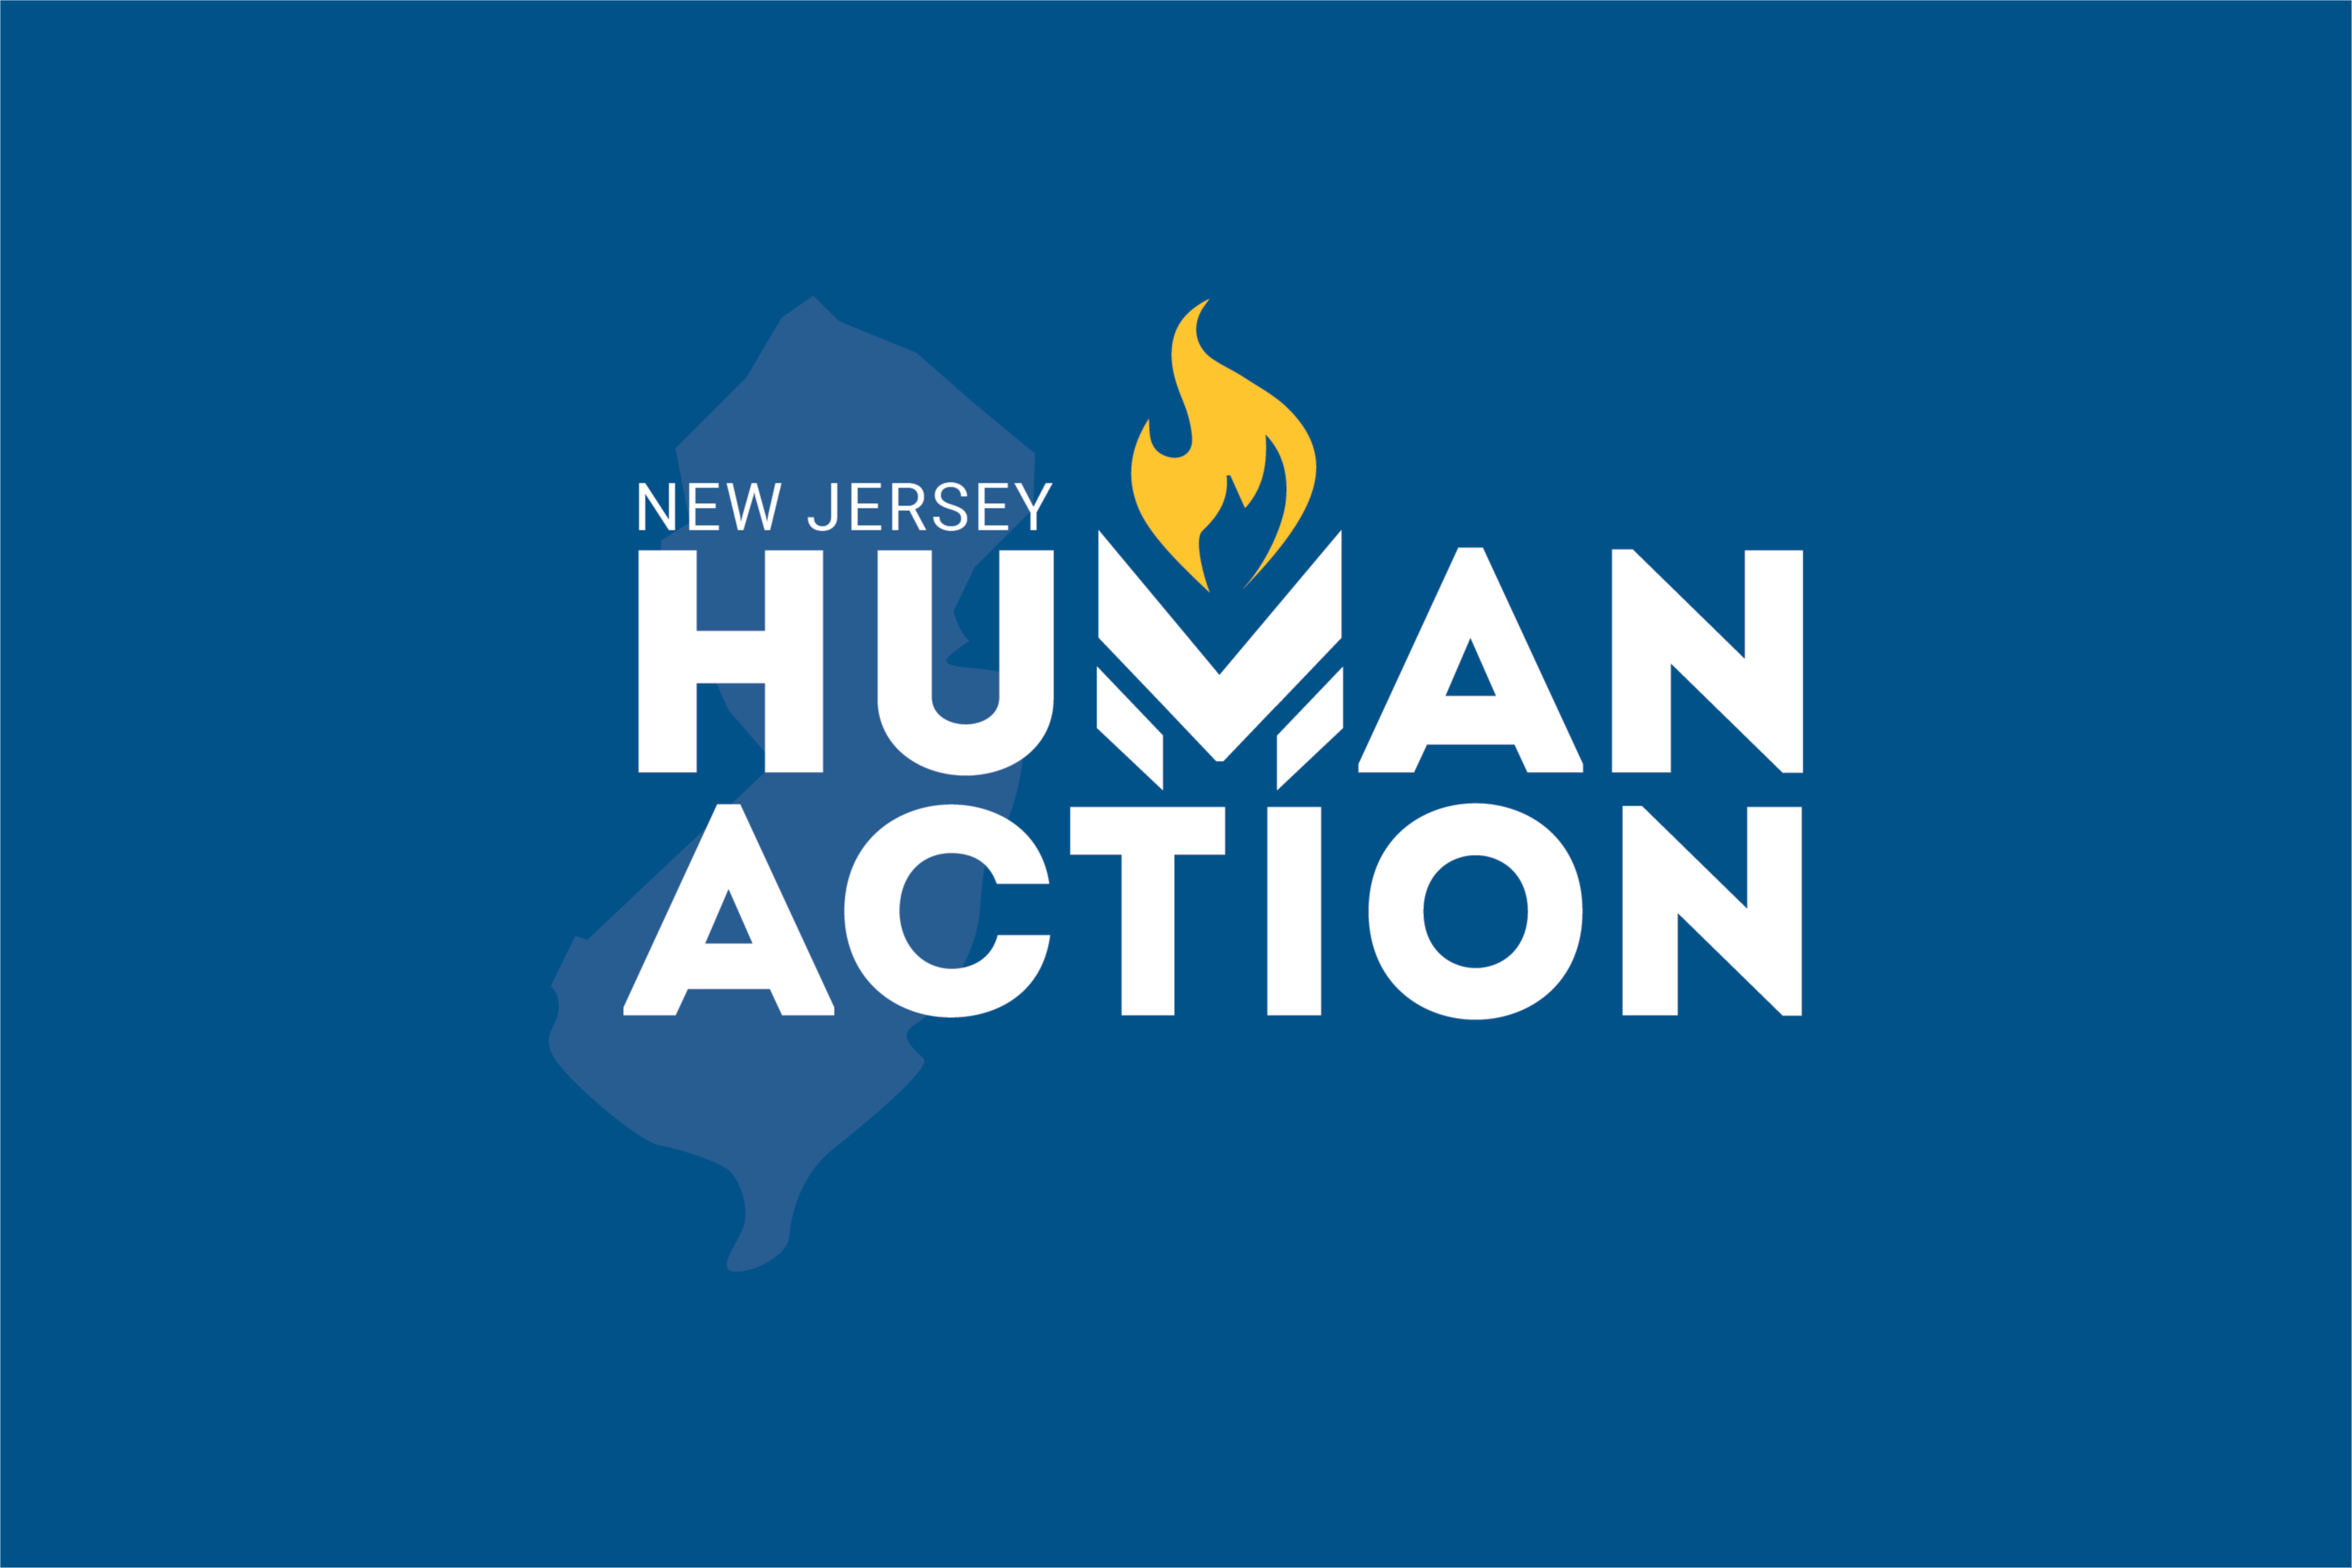 NJ Human Action logo